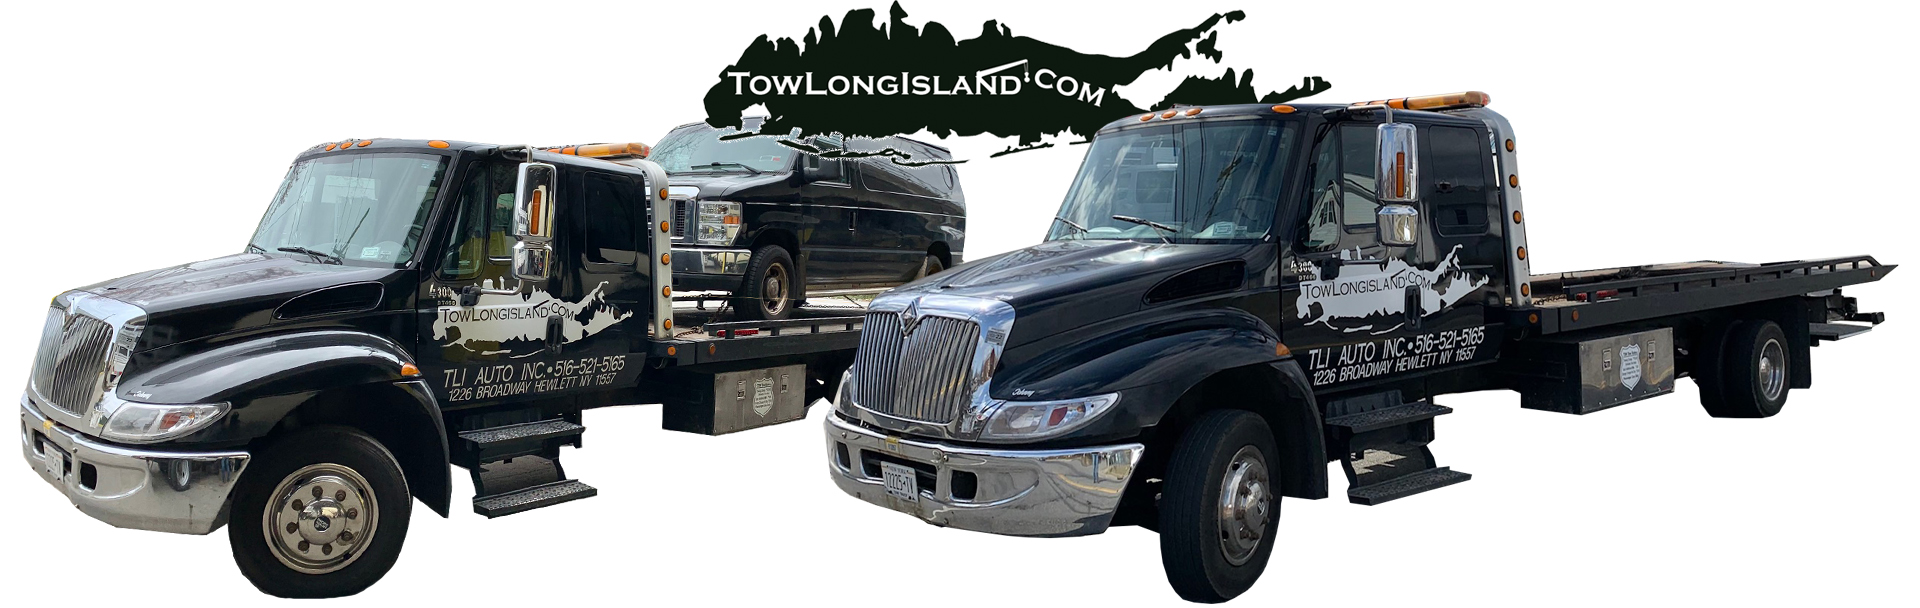 TowLongIsland.com | Tow Truck Professional Services | Franklin Square, Long Island, New York